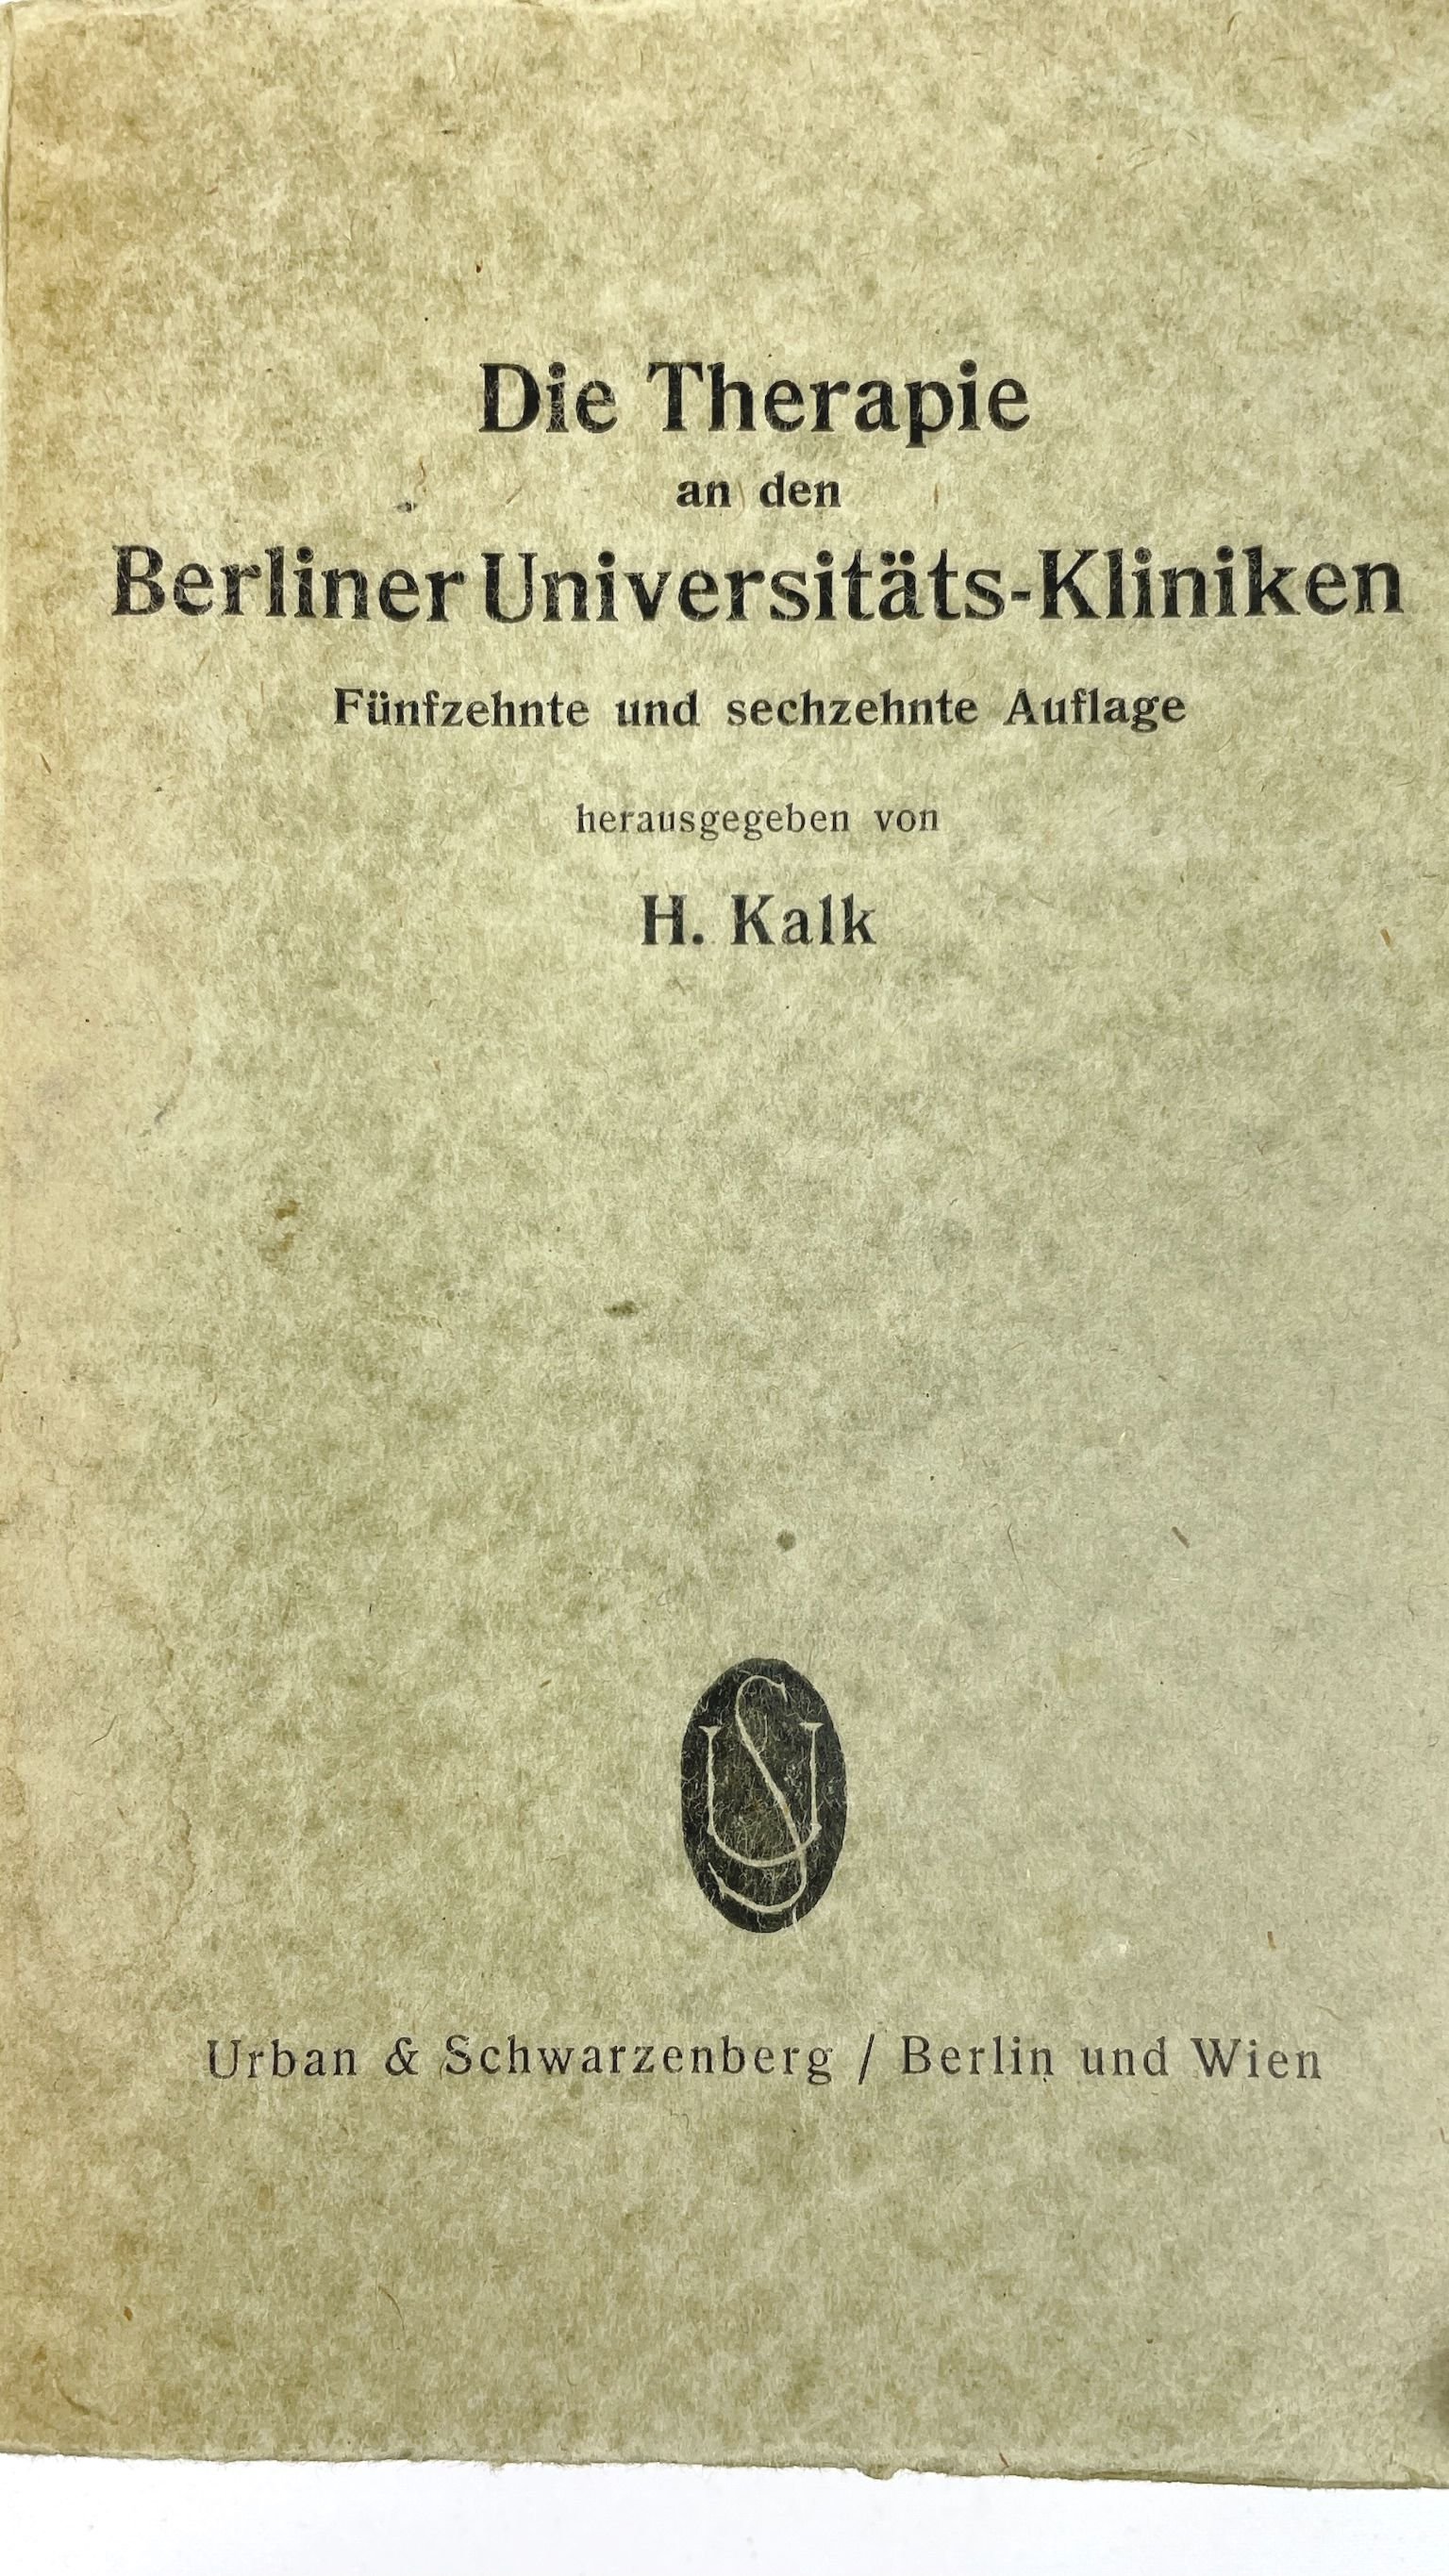 Die Therapie an den Berliner Universitäts-Kliniken (Krankenhausmuseum Bielefeld e.V. CC BY-NC-SA)